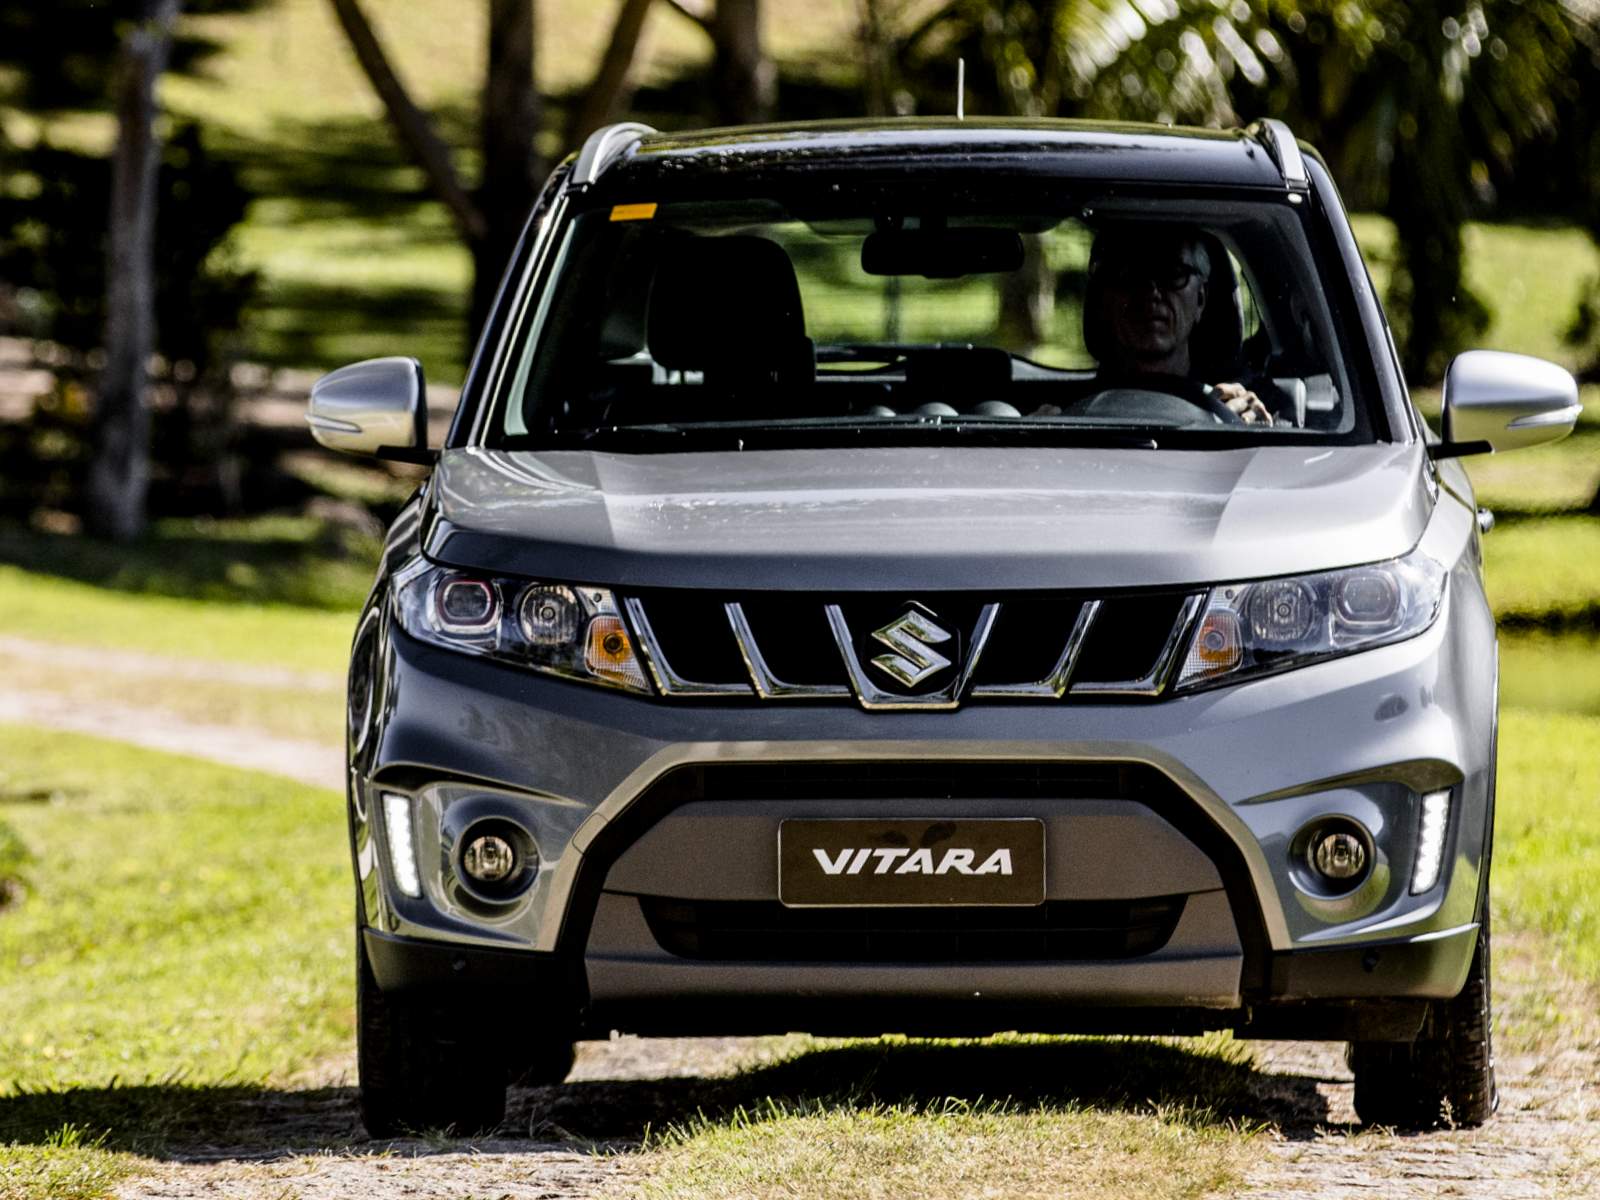 New Suzuki Vitara 2017: preços, consumo, detalhes - vídeo